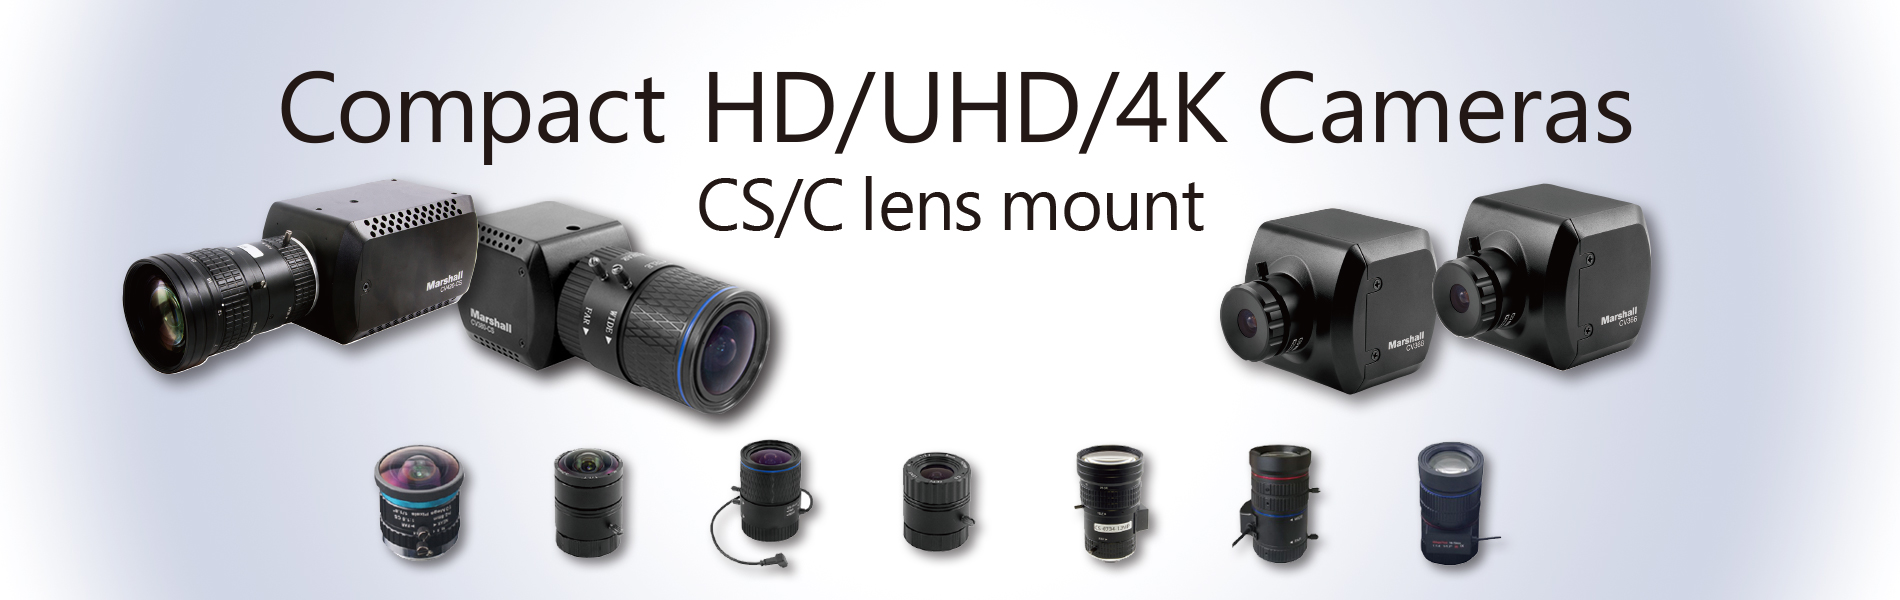 Compact HD/UHD/4K Cameras